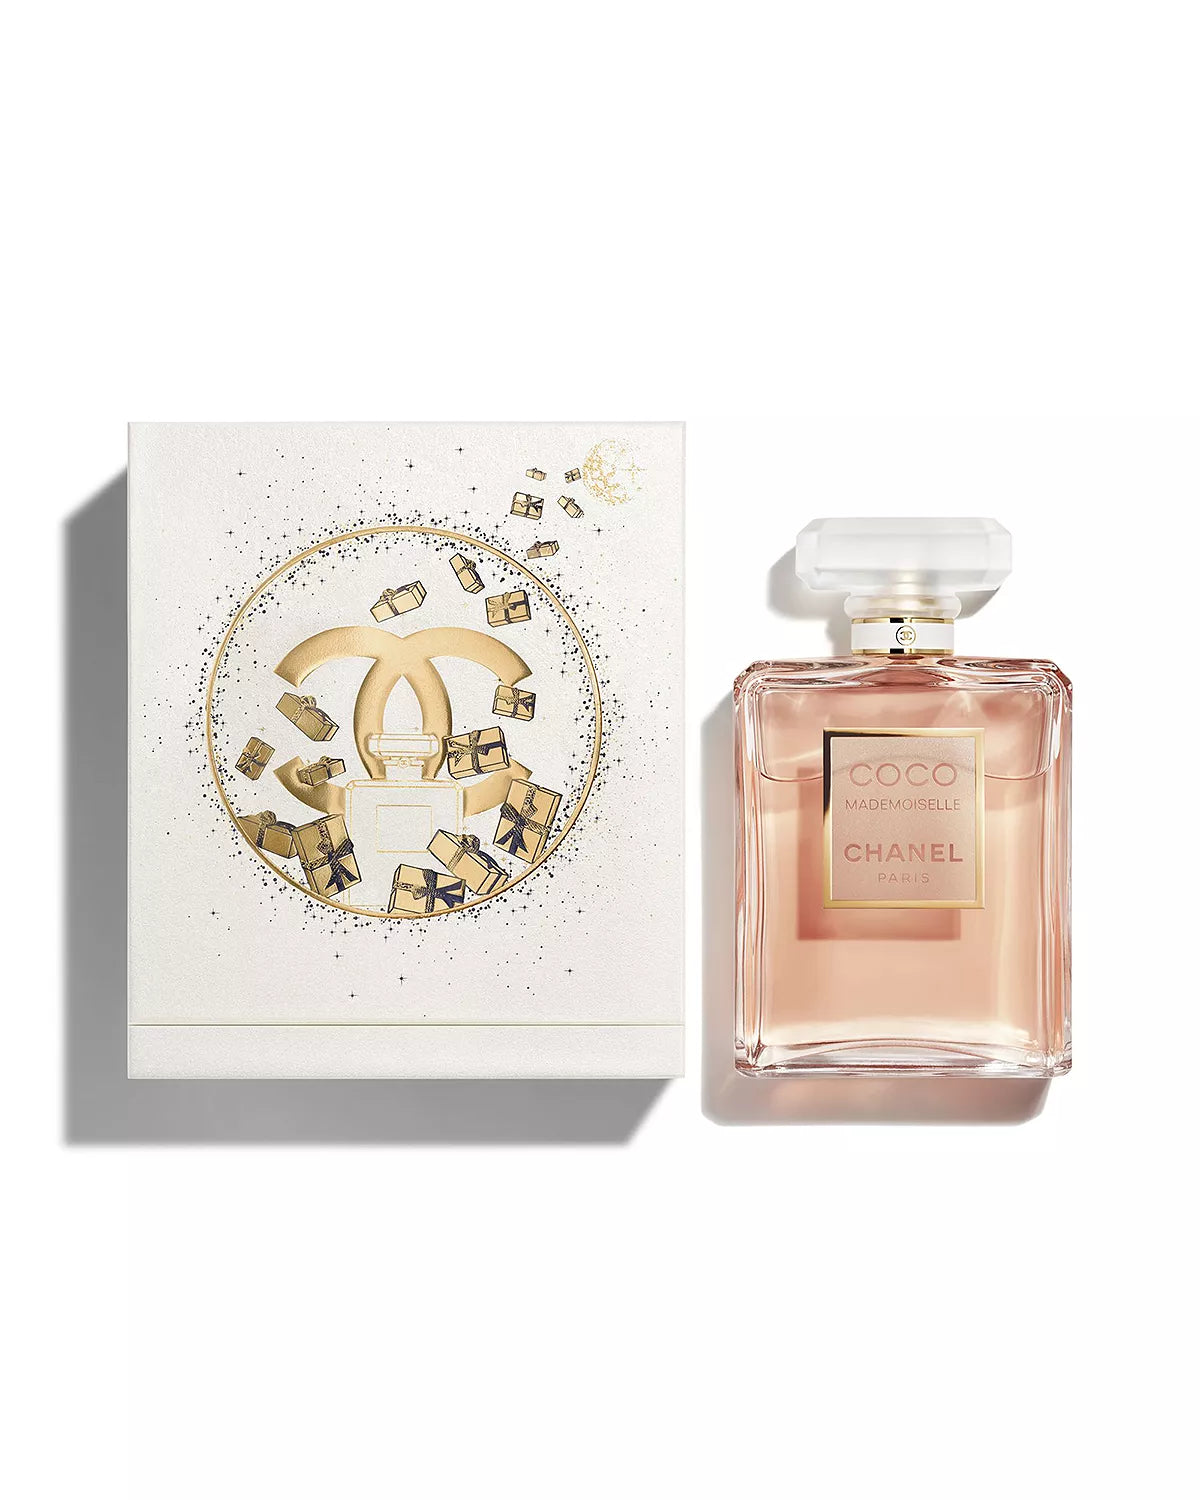 COCO MADEMOISELLE Eau de Parfum Twist & Spray Gift Set - CHANEL